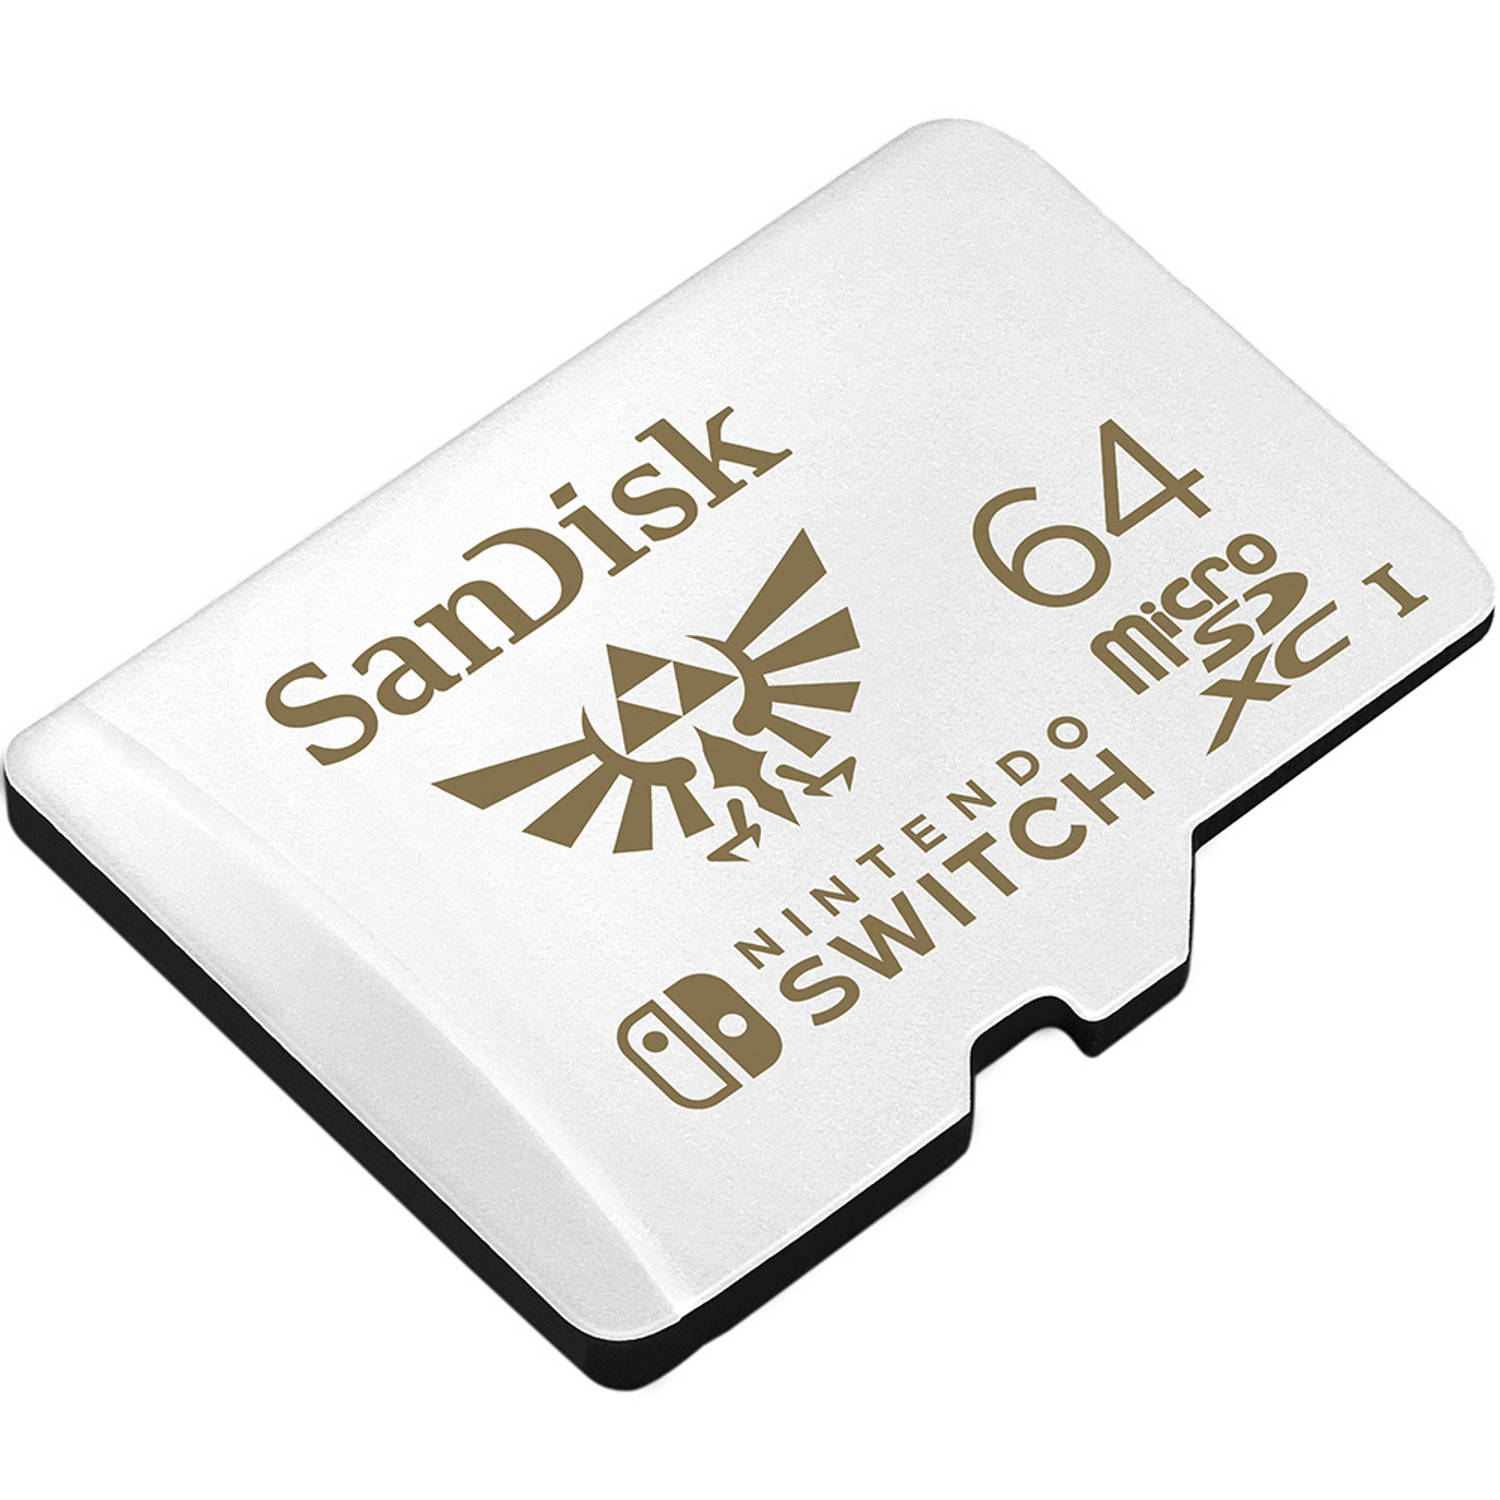 SanDisk Nintendo Switchâ¢ microSDXC-kaart 64 GB UHS-I, UHS-Class 3